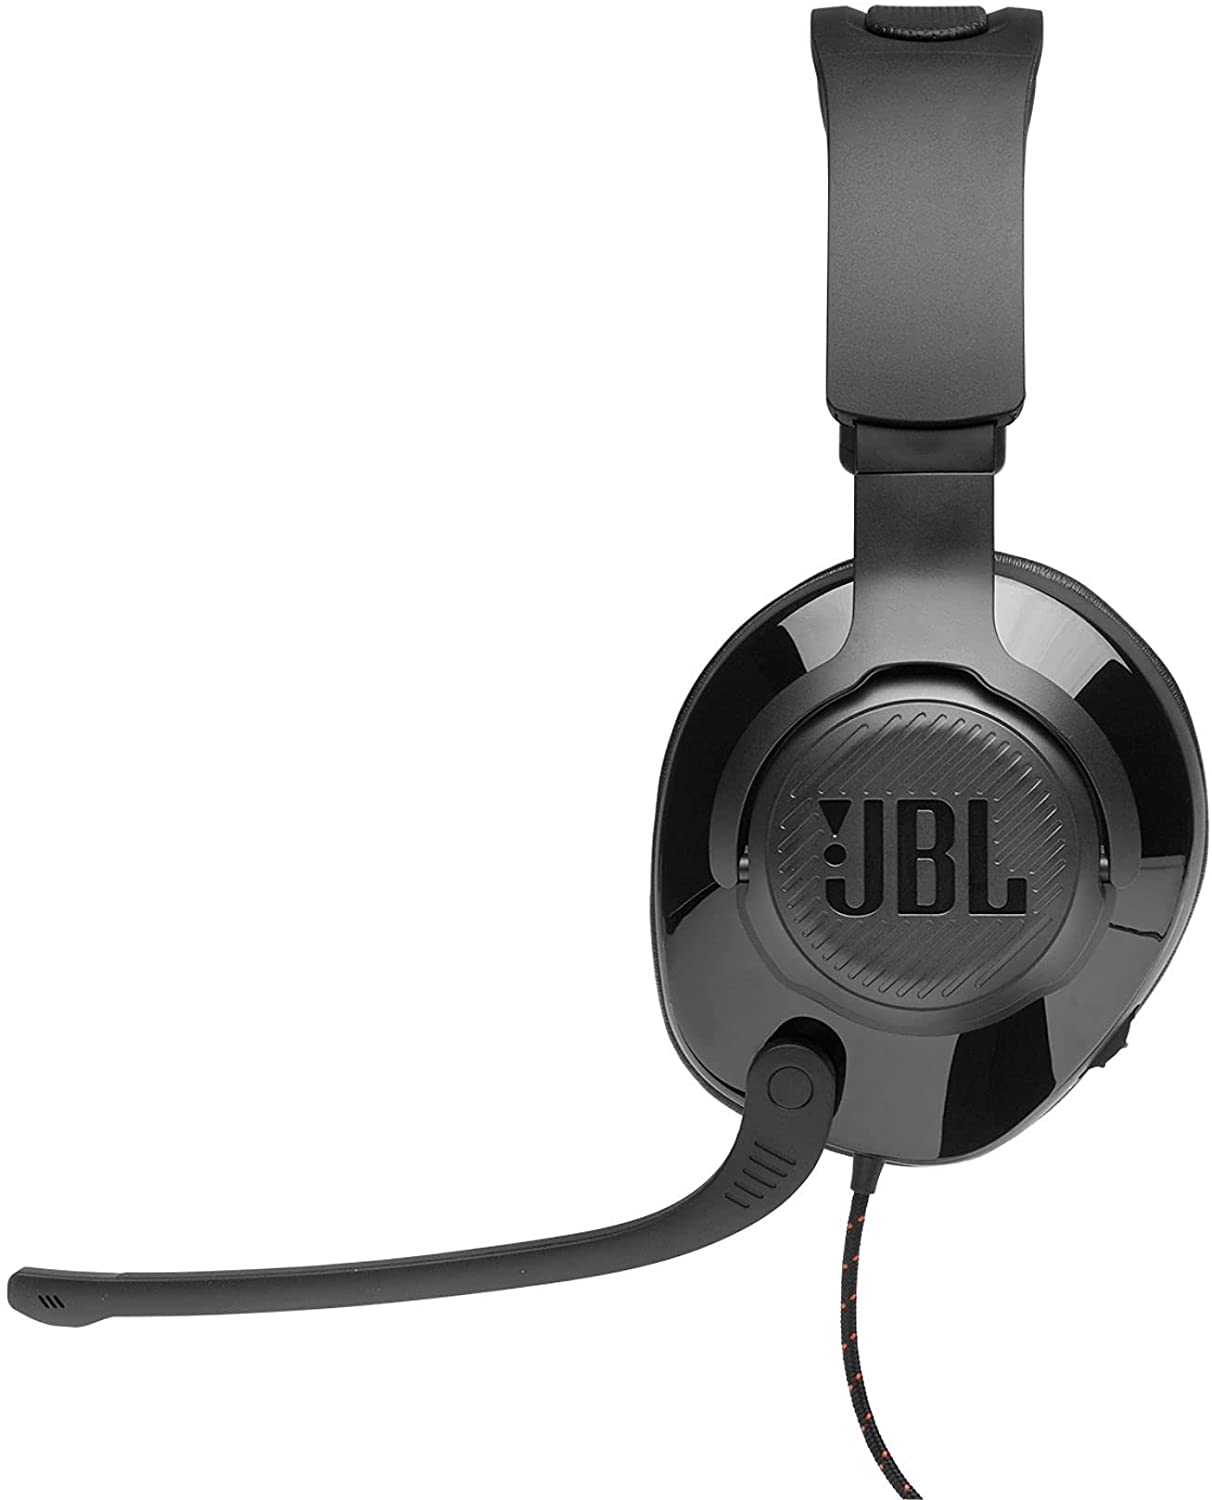 JBL QUANTUM 200 - Headphones